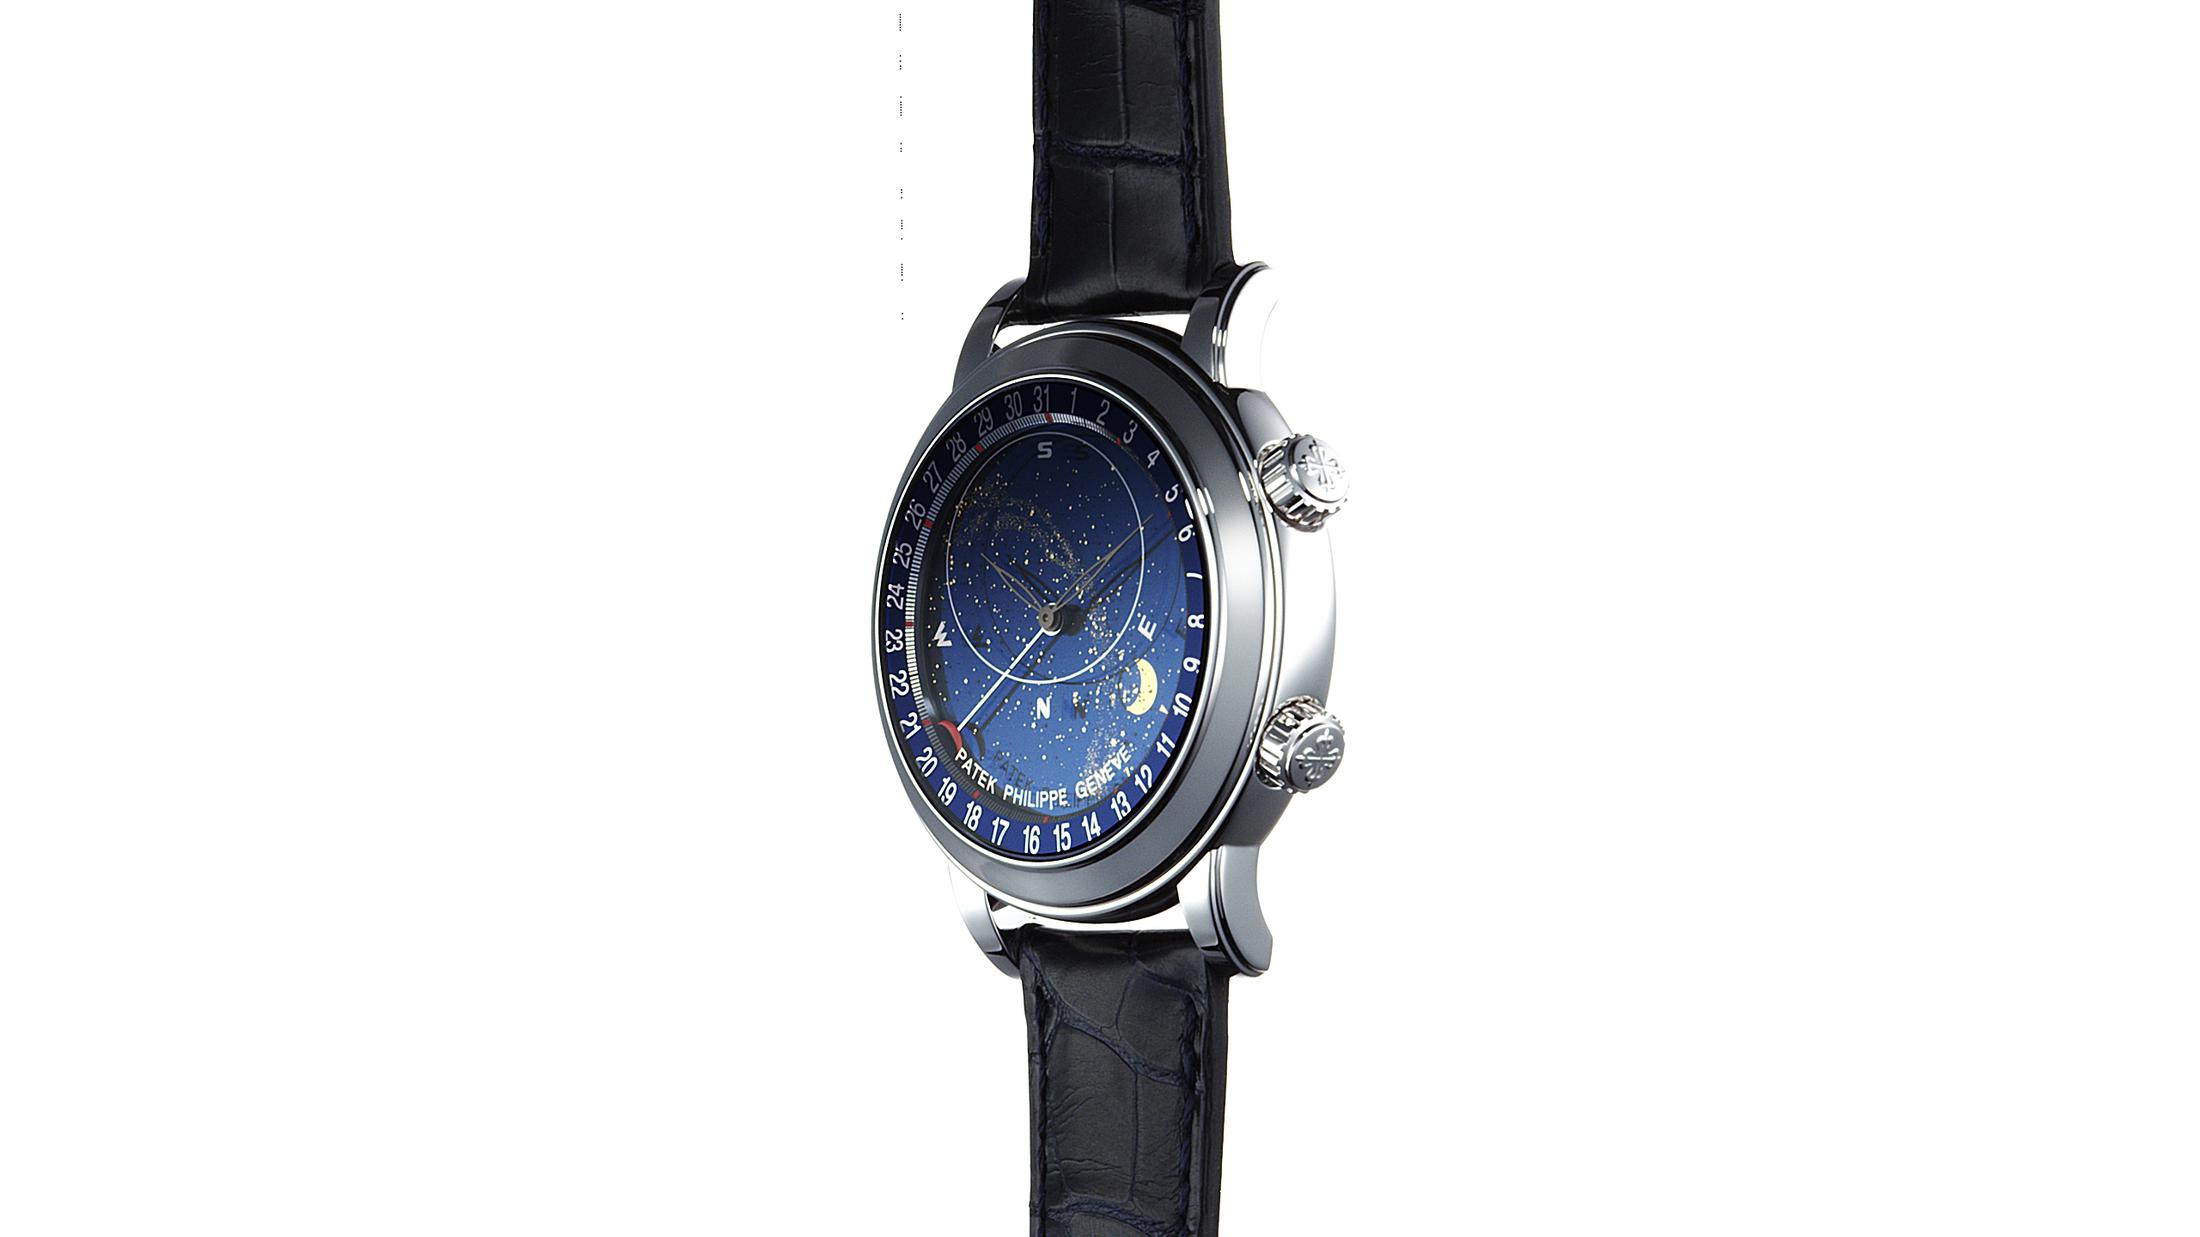 Patek Philippe Nautilus 5711 Steel Watch Box/Papers 5711/1A-011Patek Philippe Aquanaut Aquanaut 5167A-001